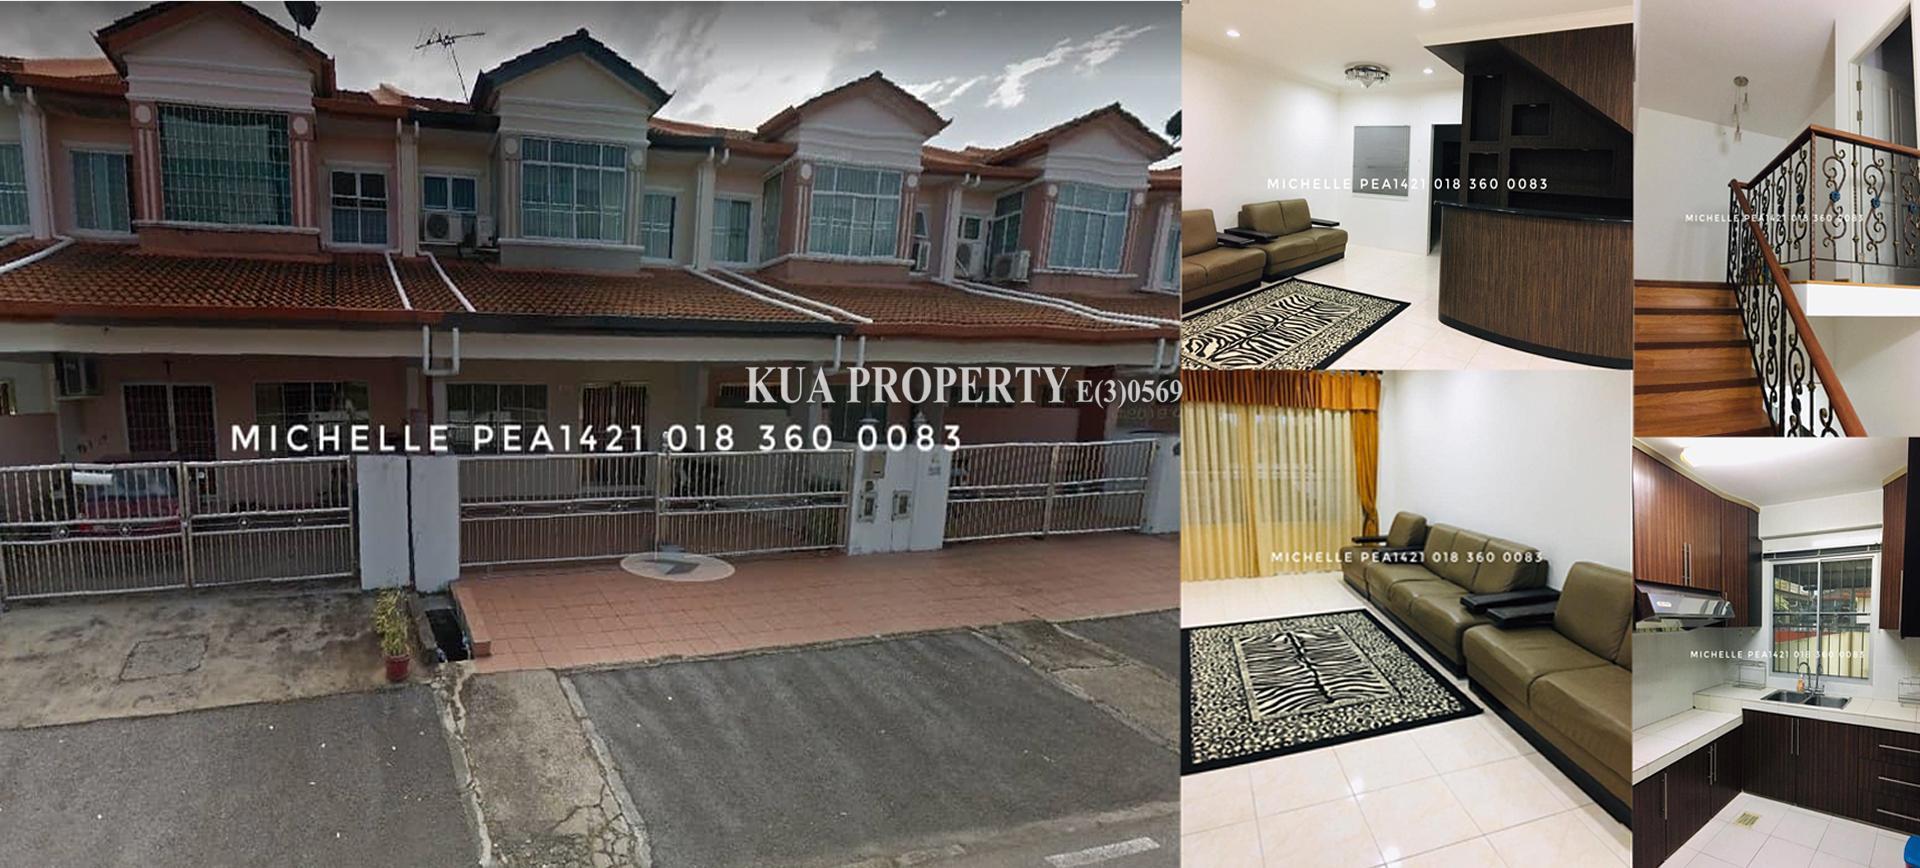 Double Storey Terrace intermediate For Rent Located at Sungai Maong Tengah